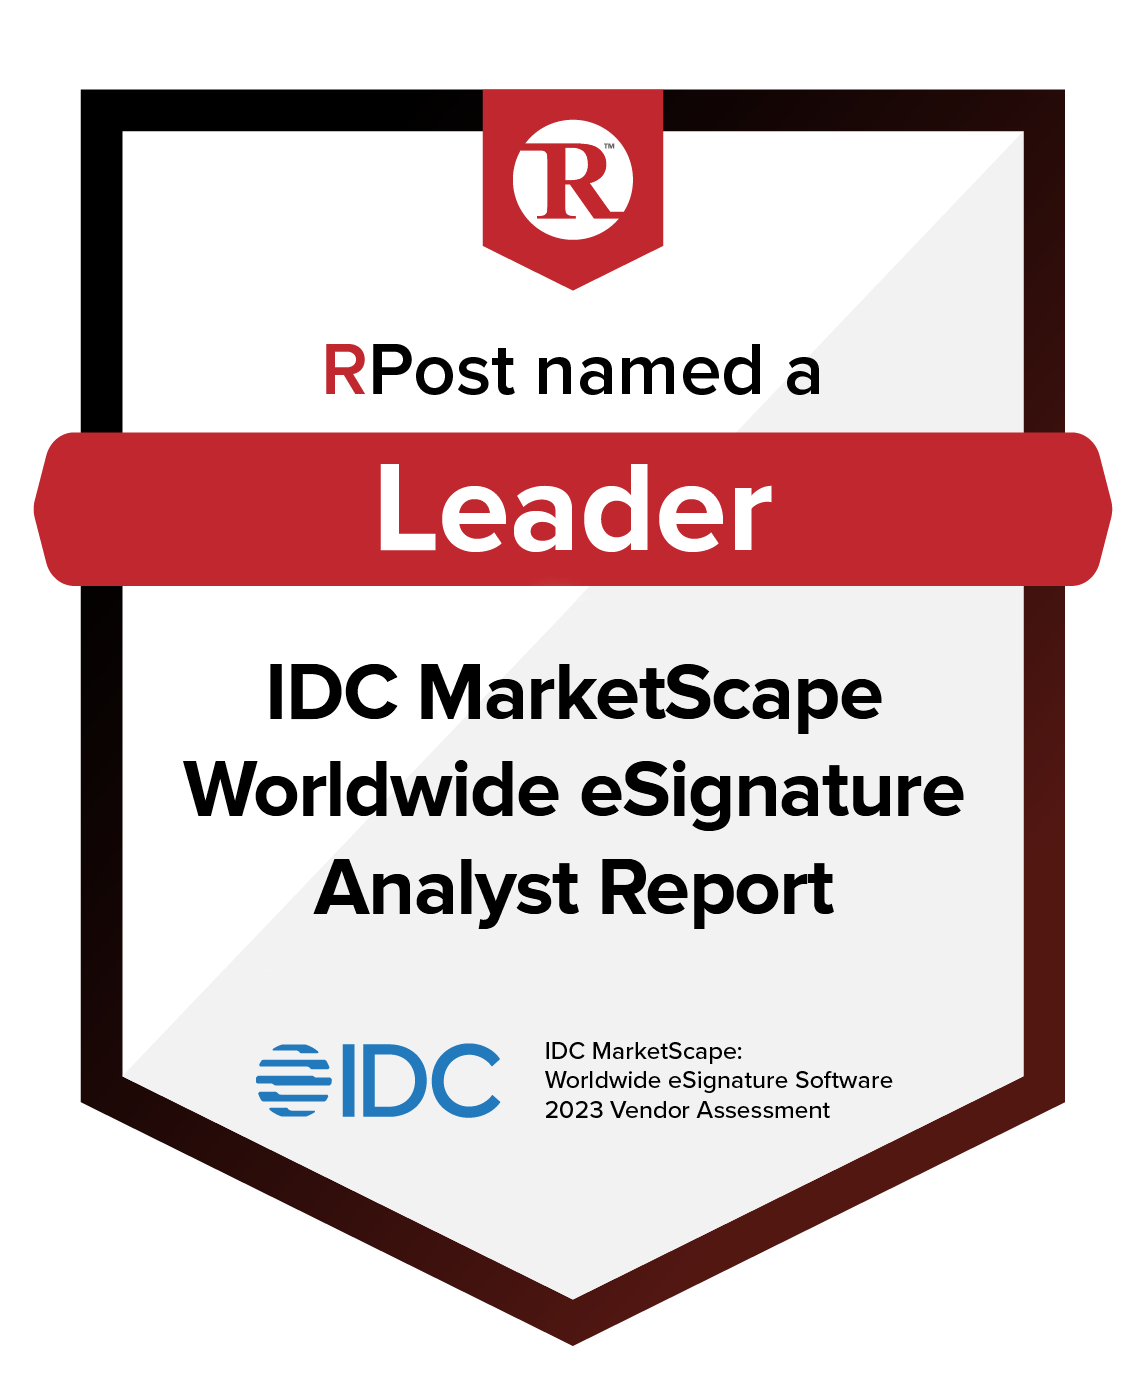 IDC MarketScape eSignature Analyst Report